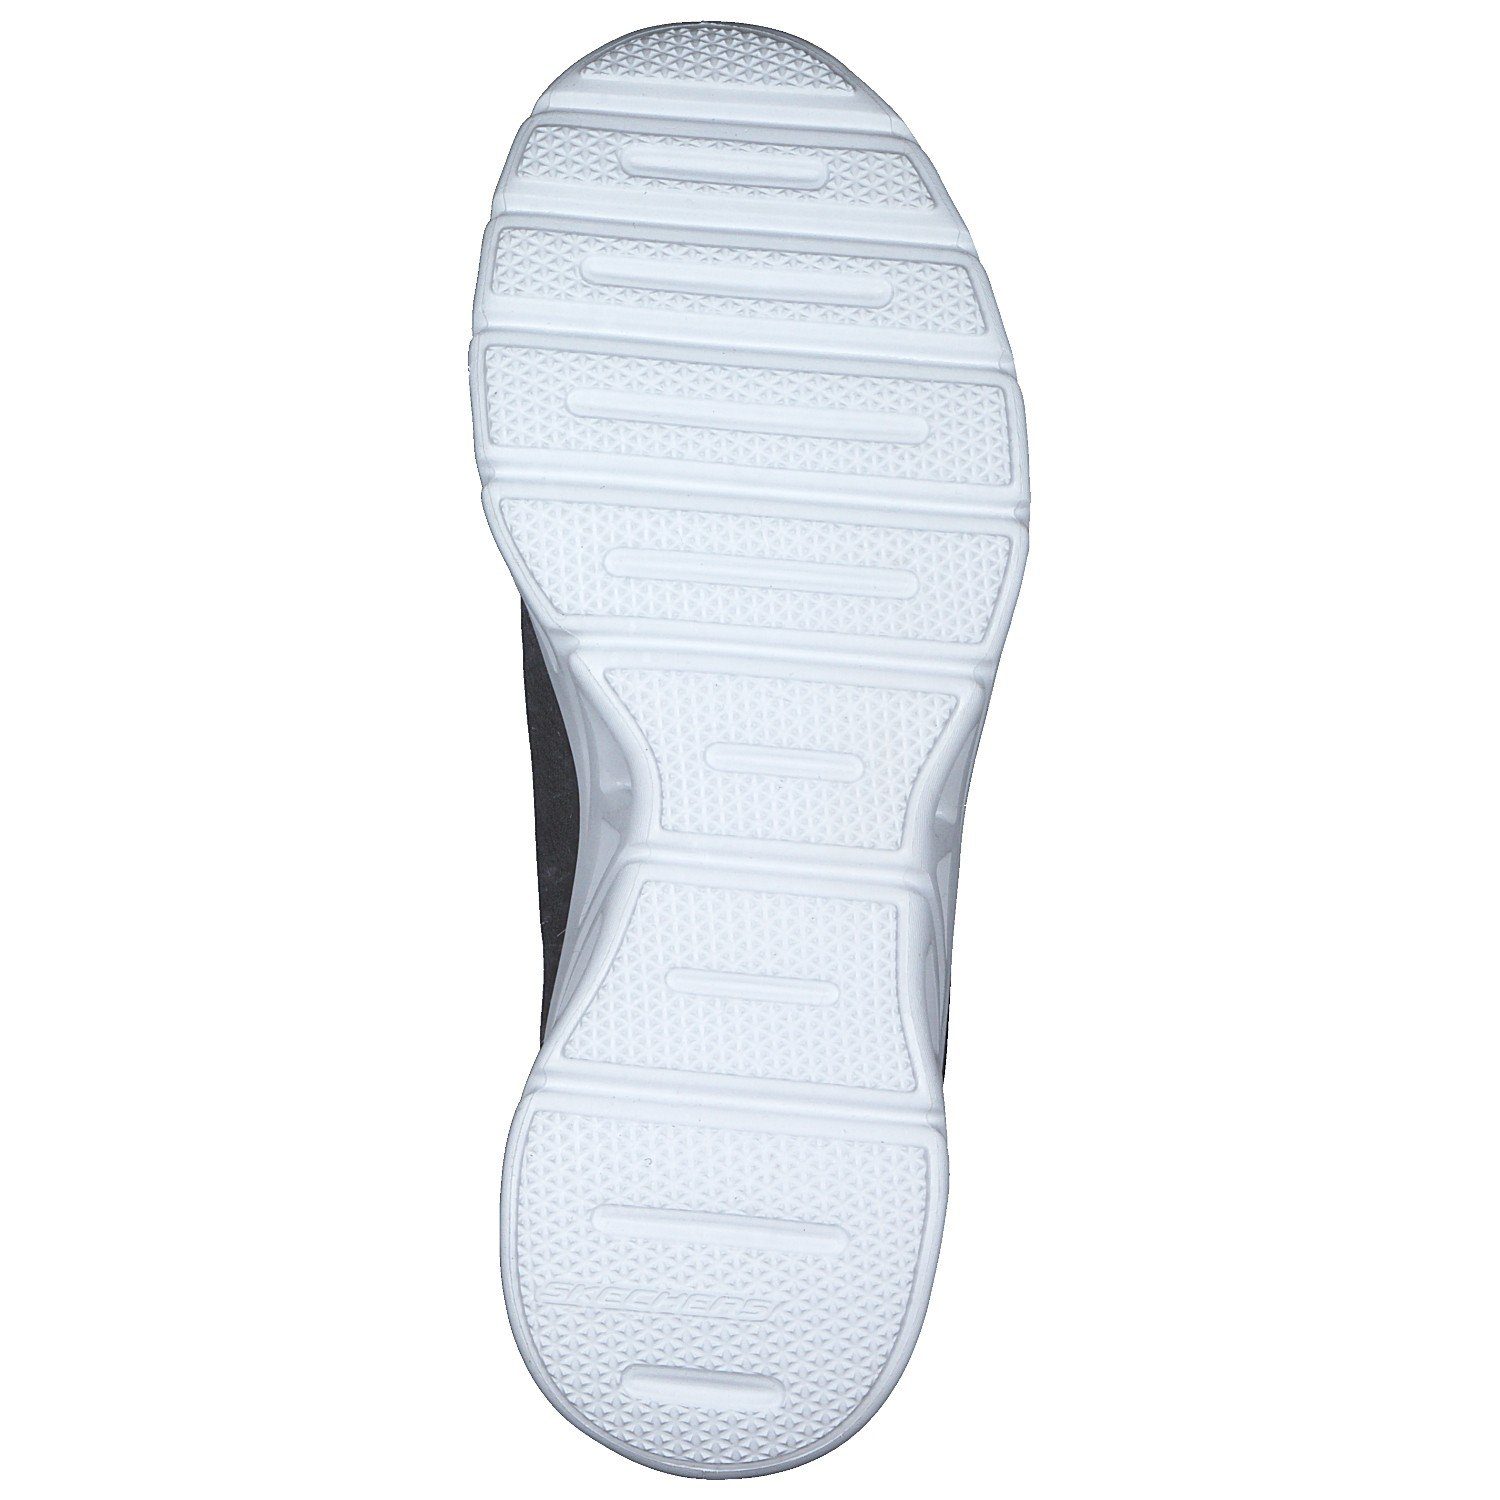 Skechers 149556 Sneaker BKW black (20202798) white